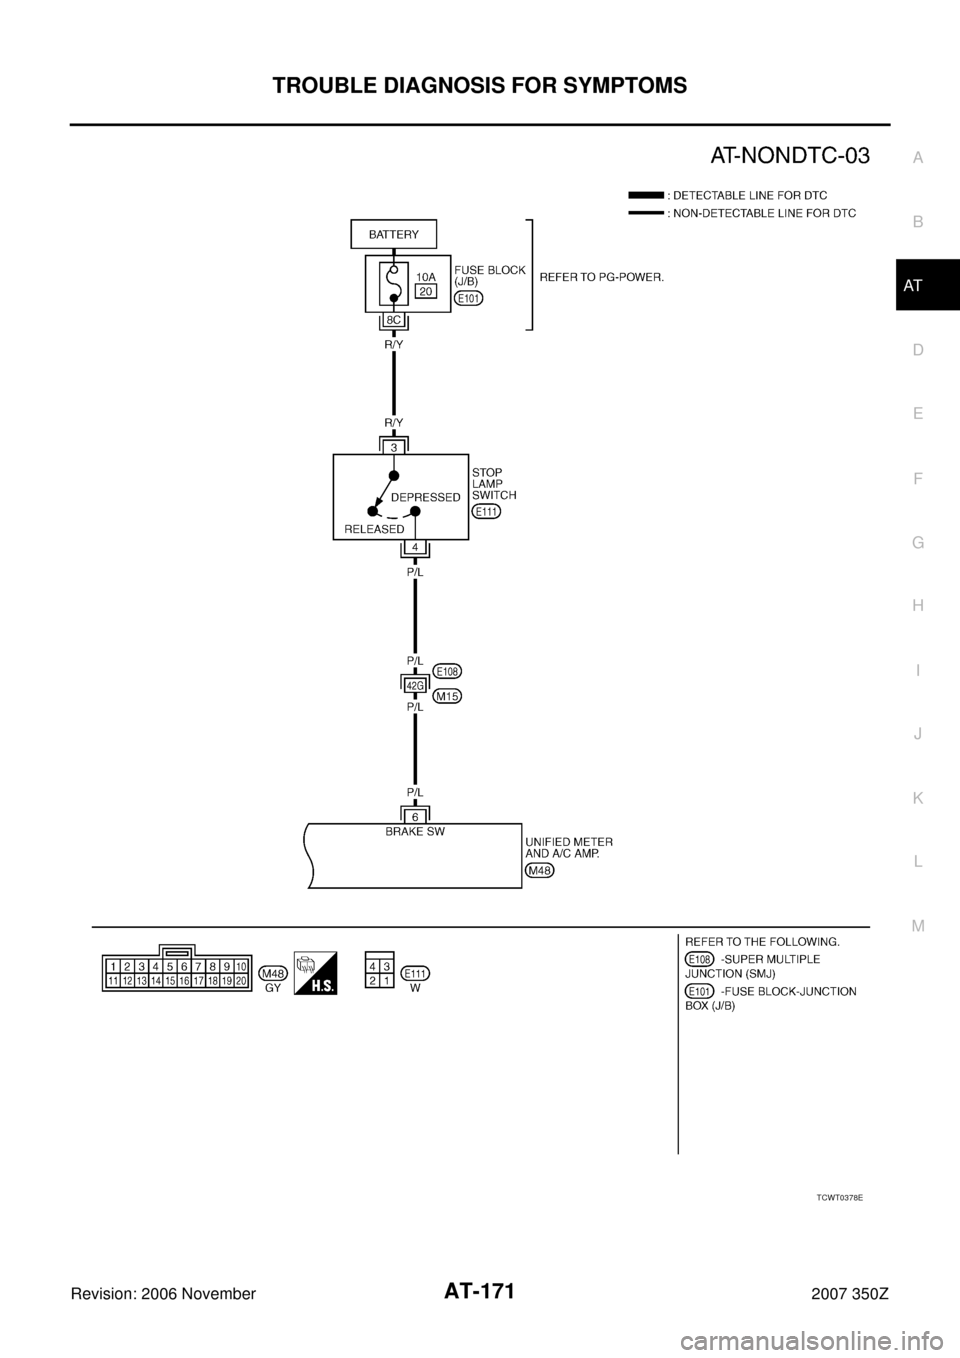 NISSAN 350Z 2007 Z33 Automatic Transmission Workshop Manual TROUBLE DIAGNOSIS FOR SYMPTOMS
AT-171
D
E
F
G
H
I
J
K
L
MA
B
AT
Revision: 2006 November2007 350Z
TCWT0378E 